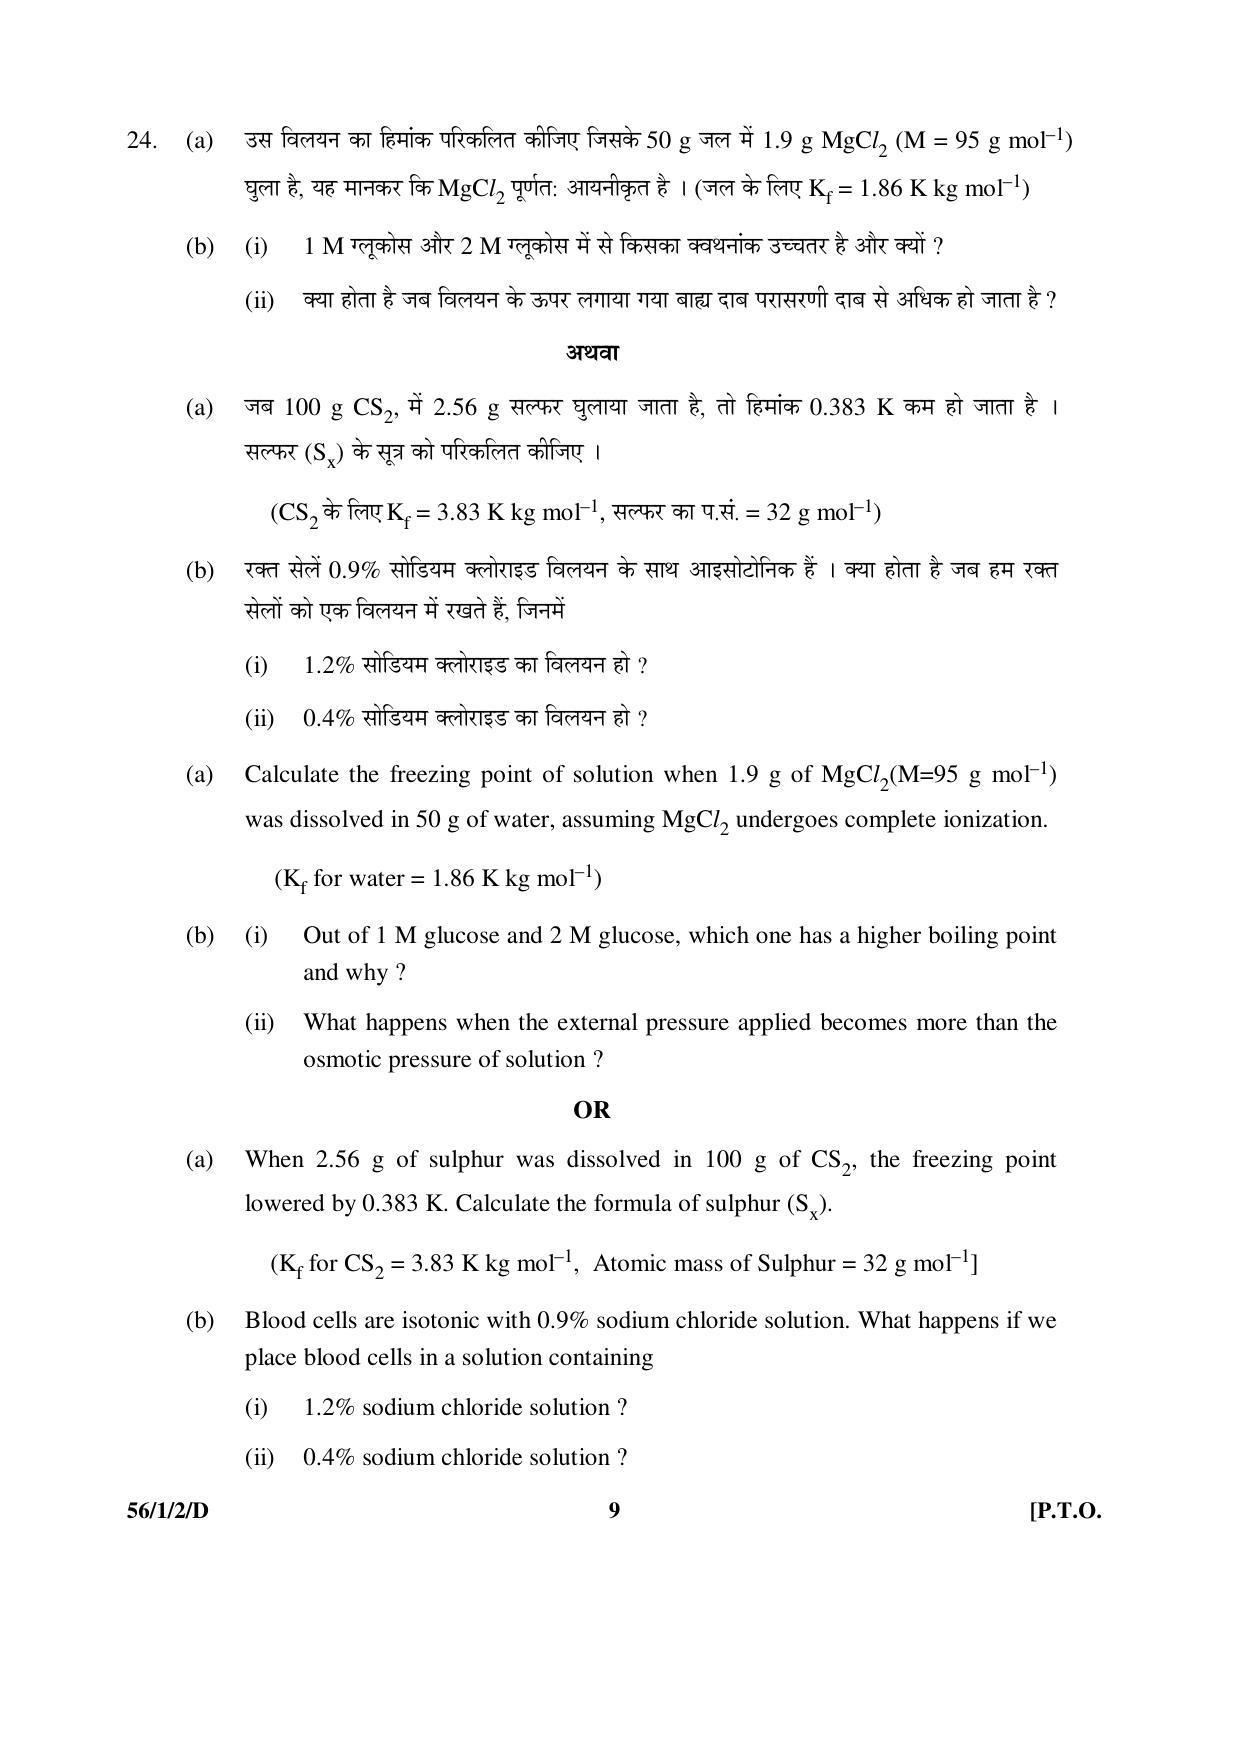 CBSE Class 12 56-1-2-D CHEMISTRY 2016 Question Paper - Page 9